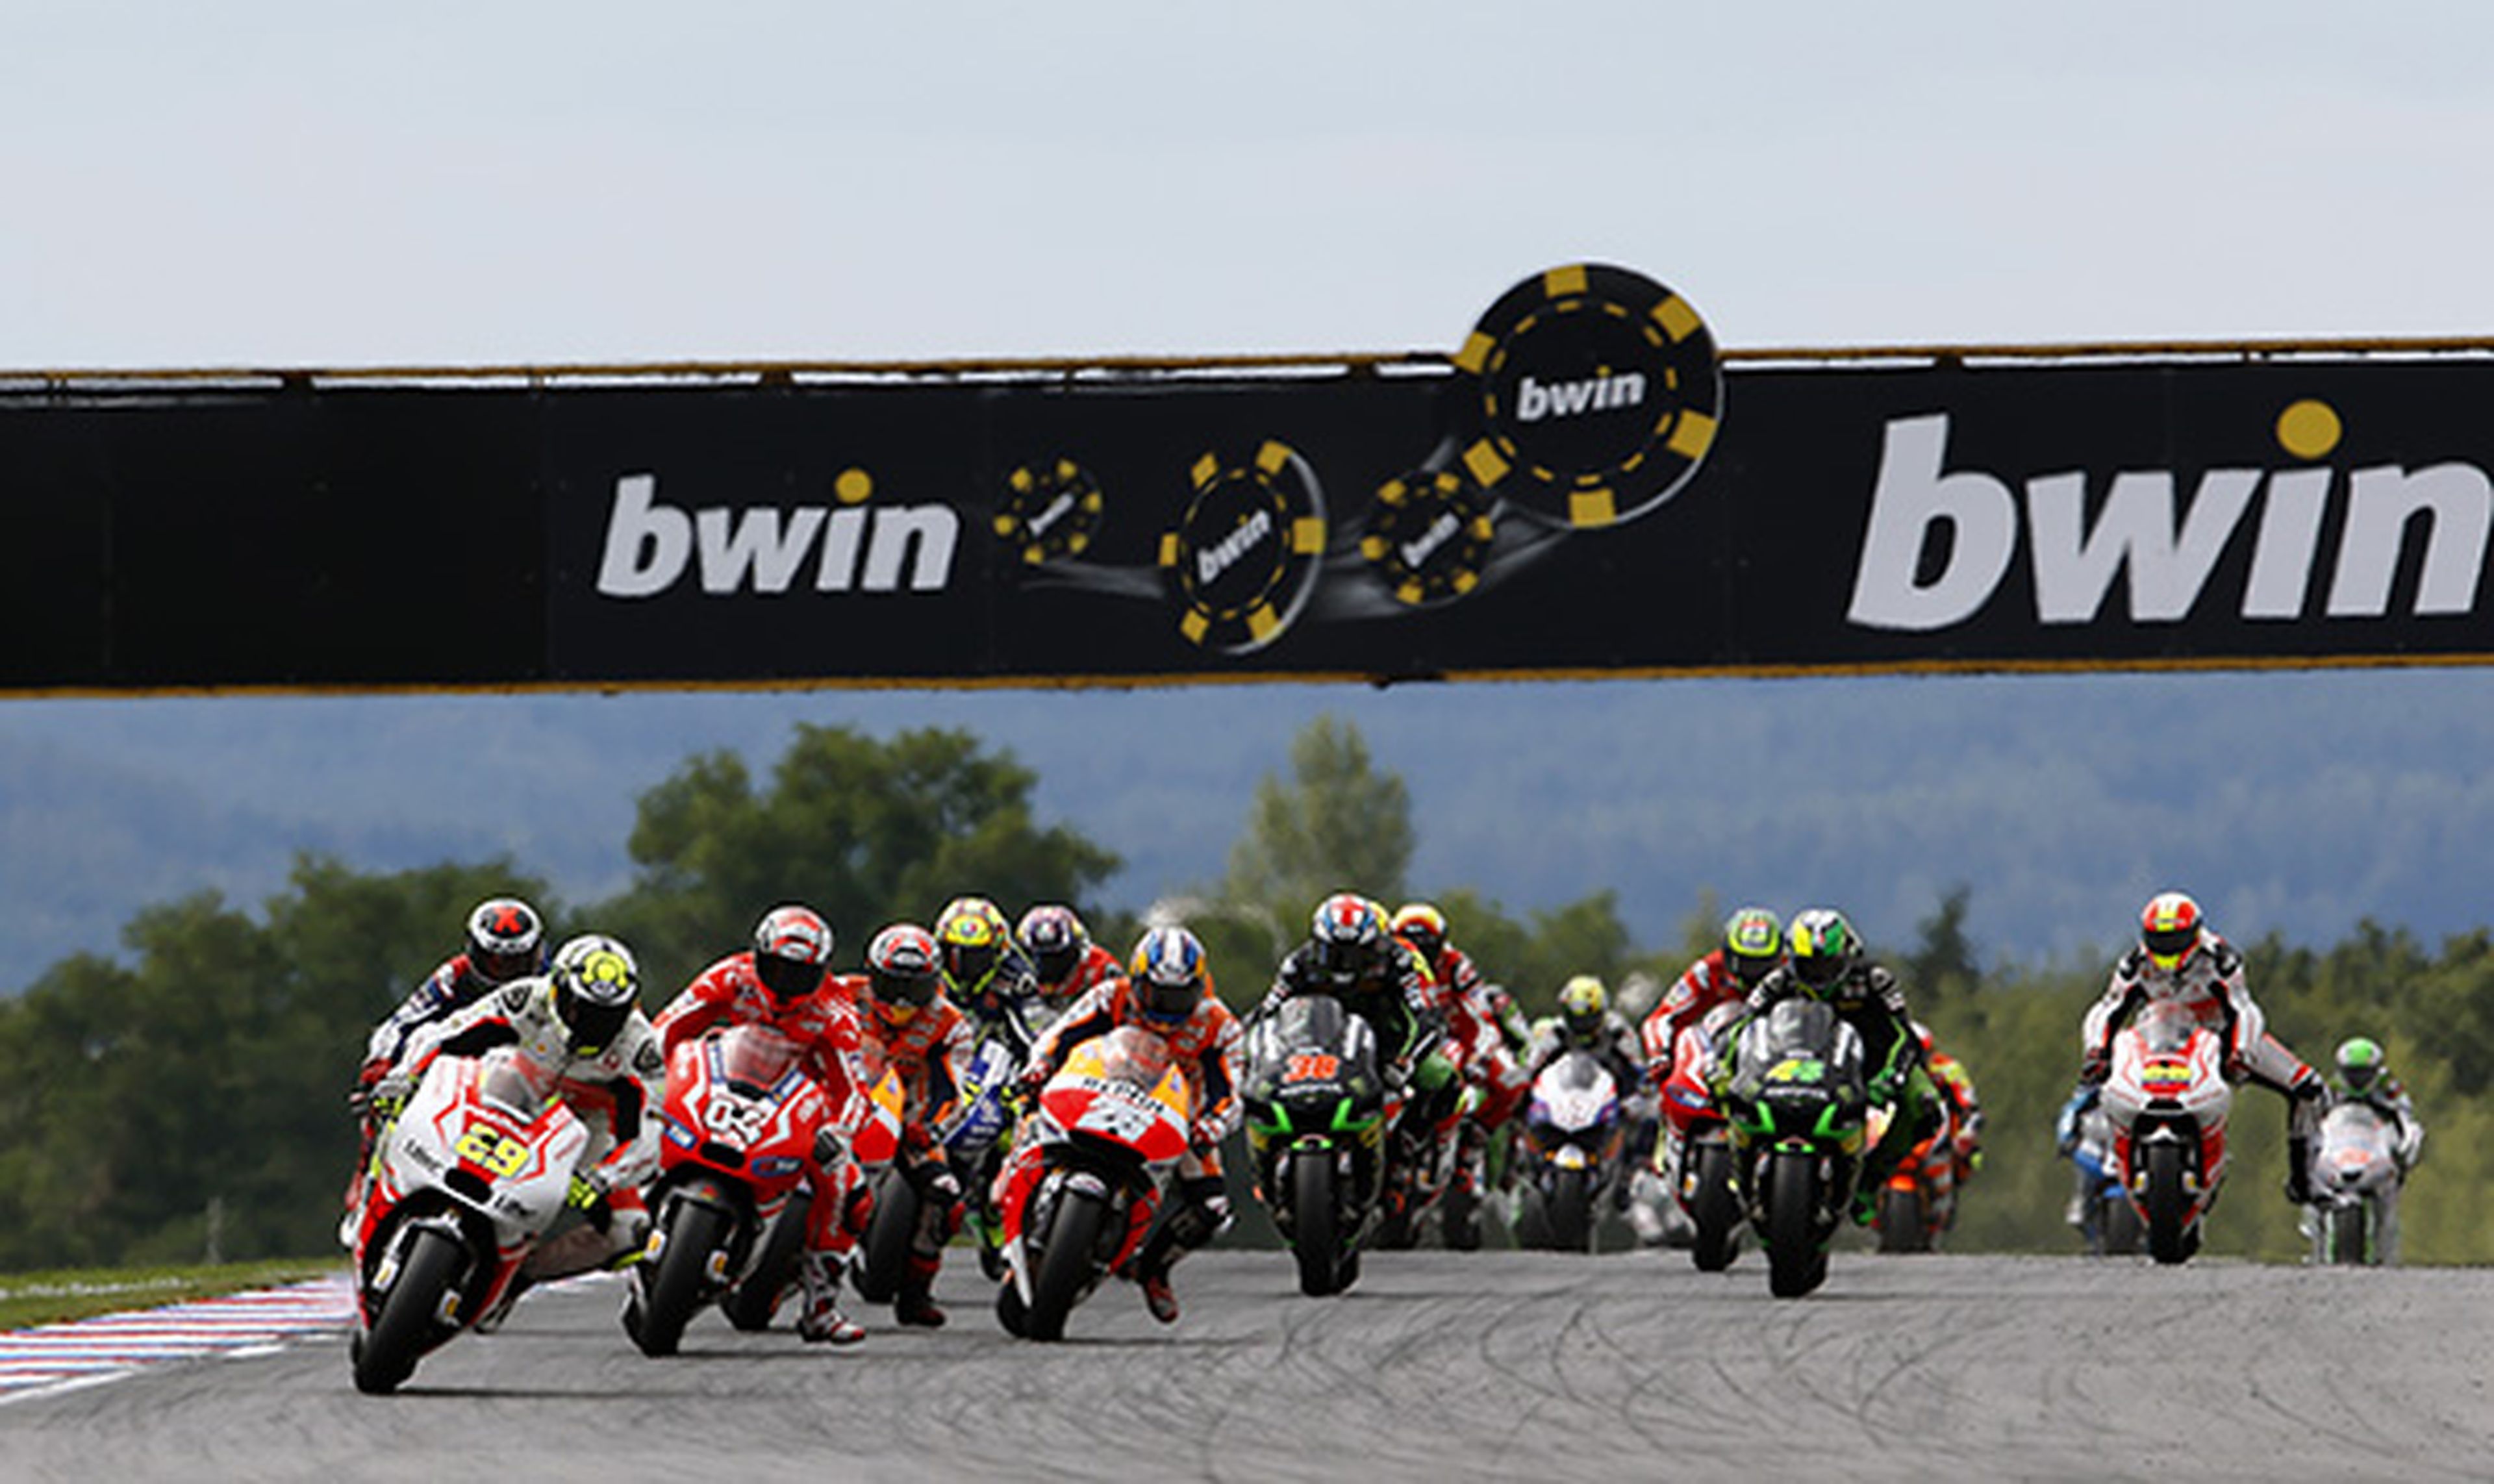 Previa MotoGP Brno 2015: un circuito decisivo